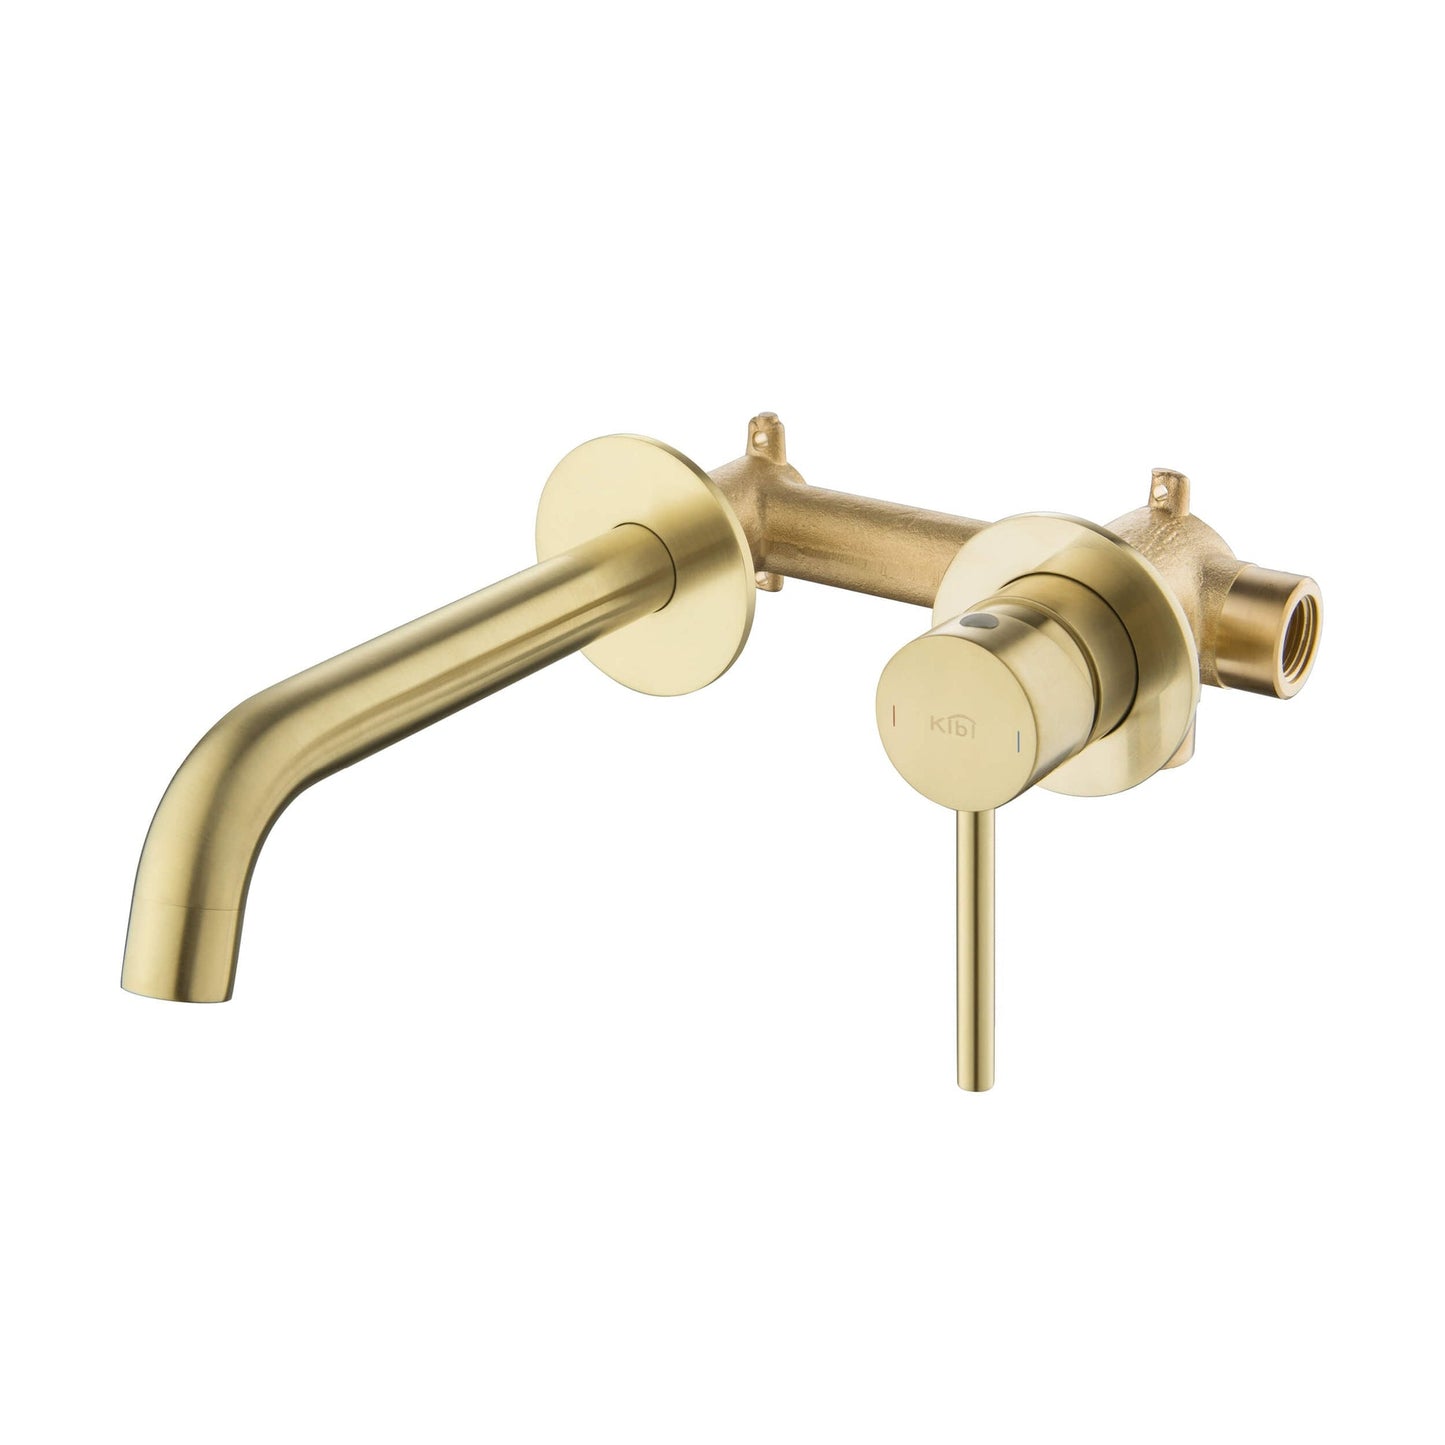 KIBI Circular Wall Mounted Single Handle Brushed Gold Solid Brass Bathroom Sink Faucet